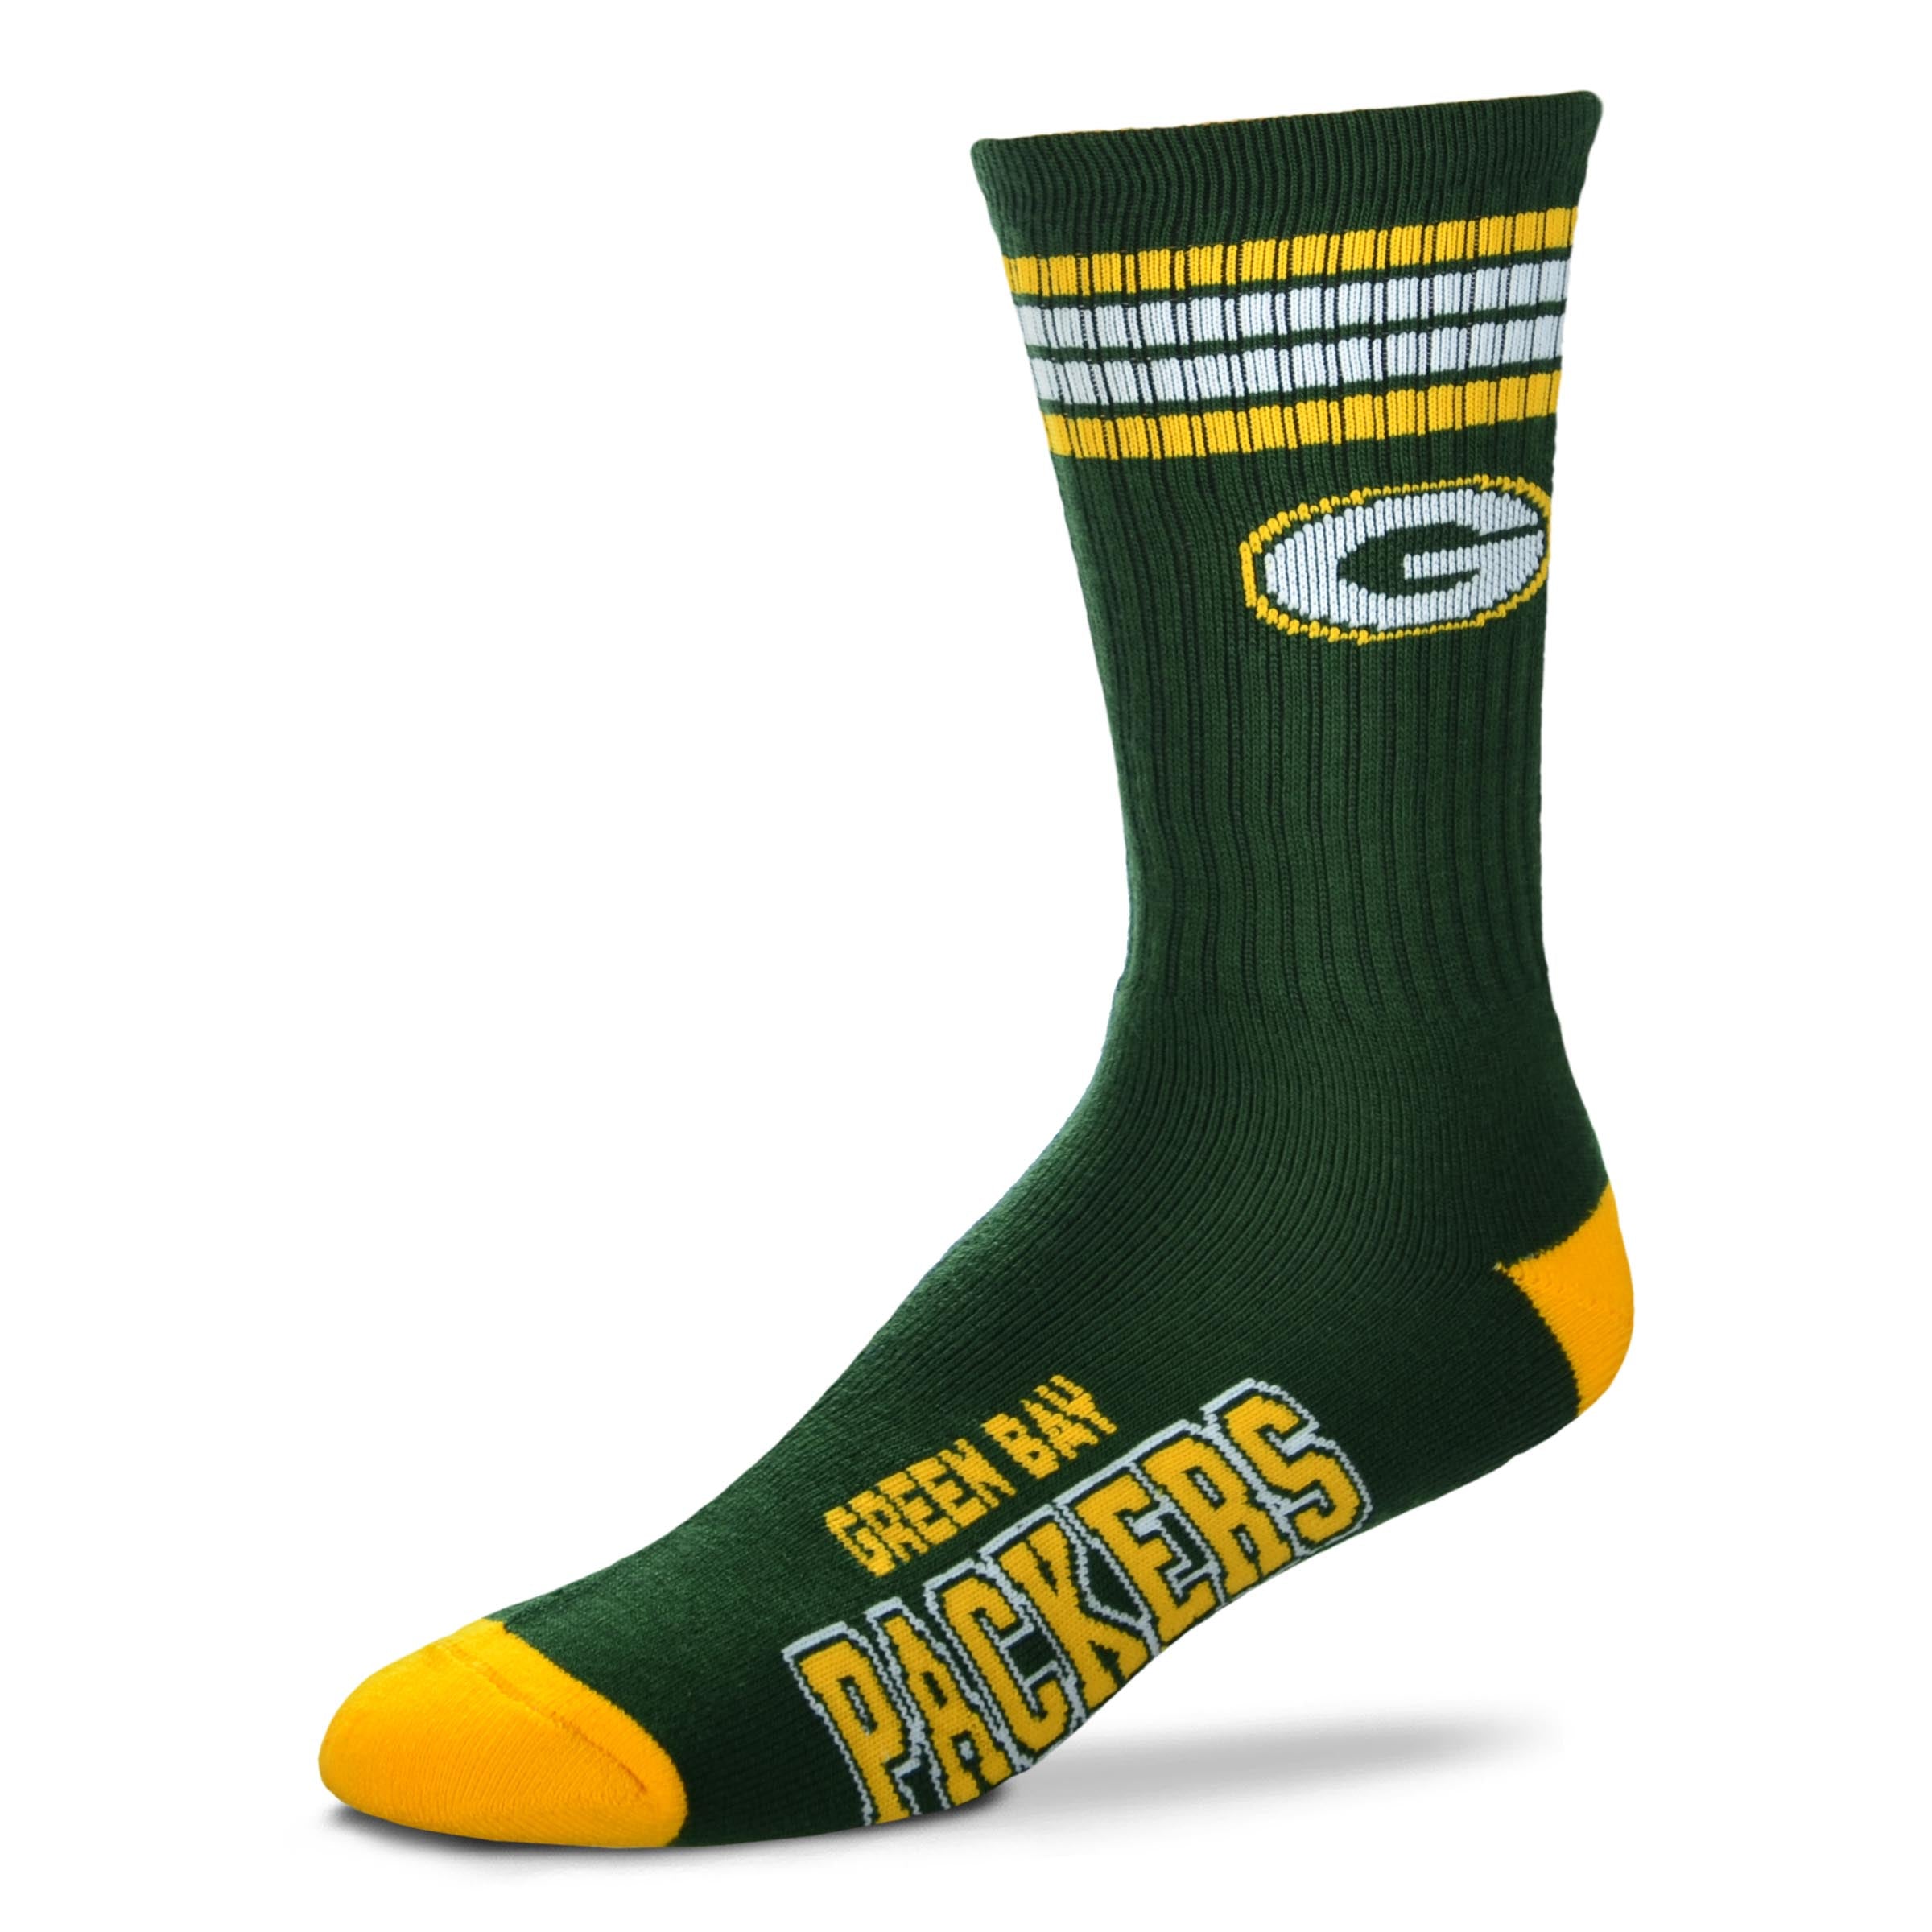 Green Bay Packers 4 Deuce Socks - Large